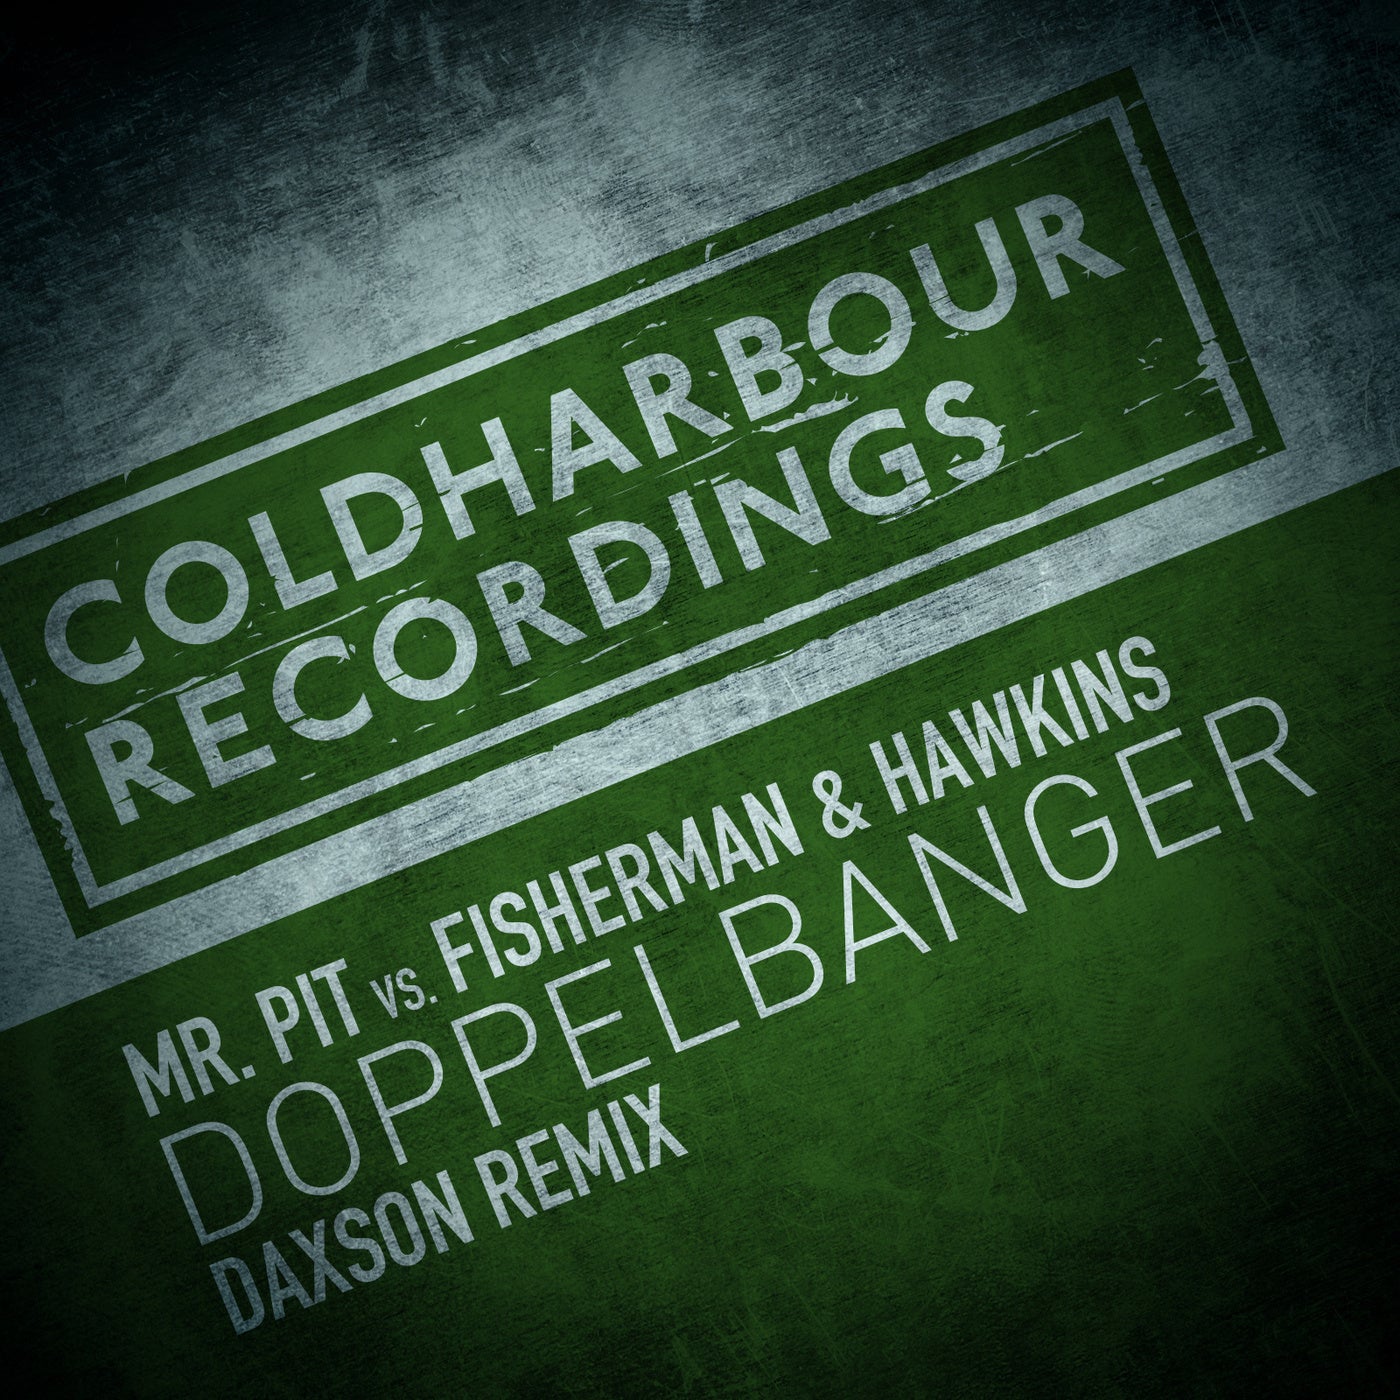 Doppelbanger - Daxson Remix